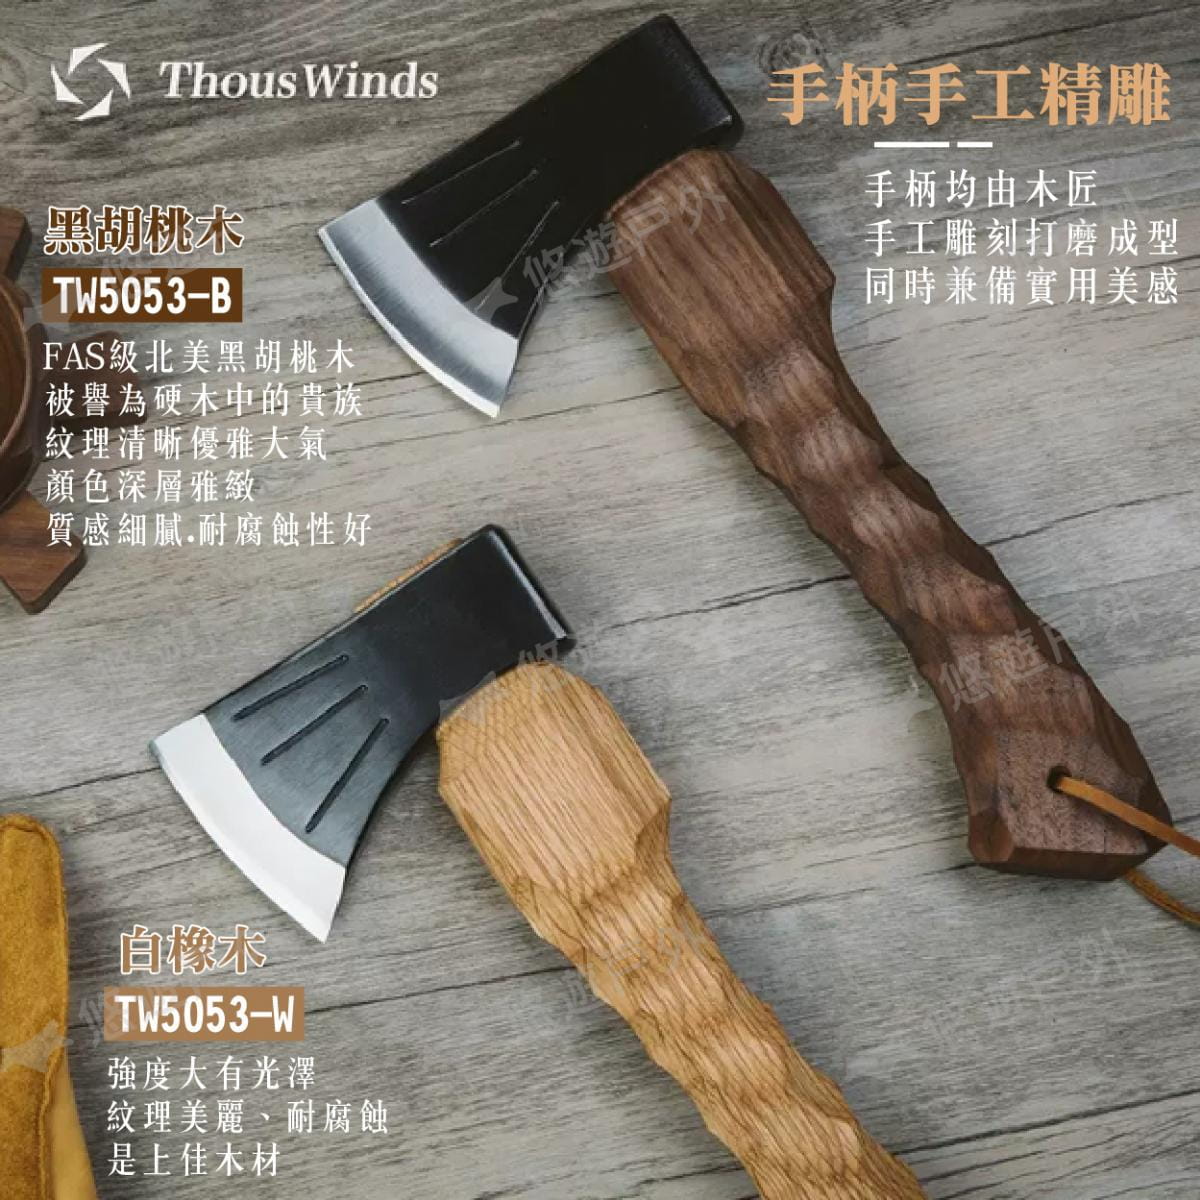 【Thous Winds】黑胡桃木錳鋼斧 TW5053-B (悠遊戶外) 4